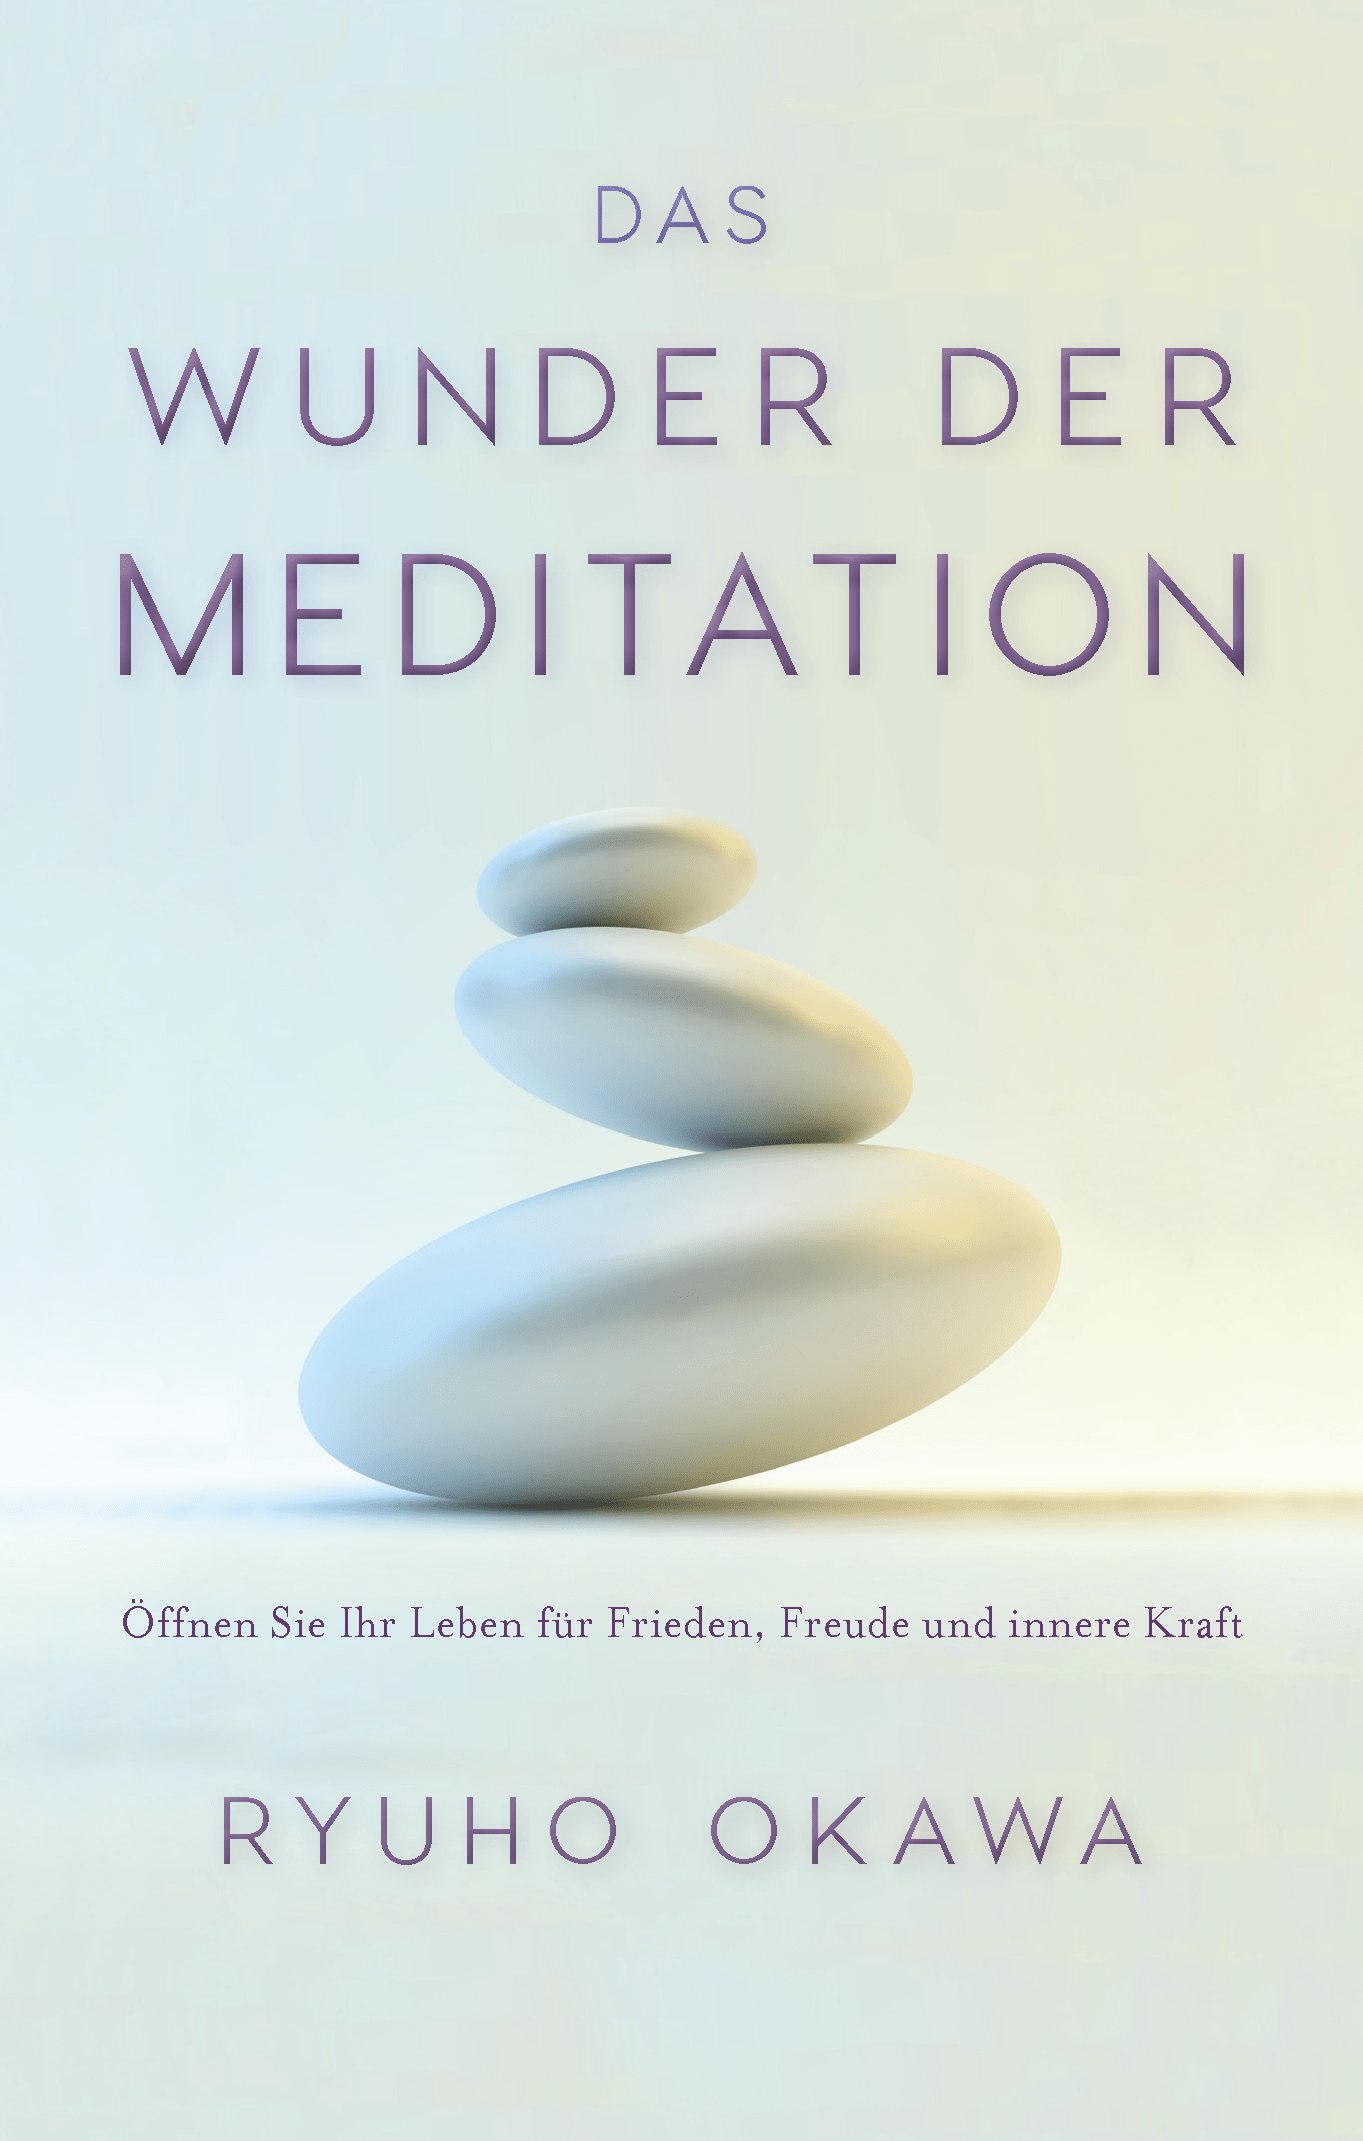 The Miracle of Meditation : Opening Your Life to Peace, Joy and the Power Within, Ryuho Okawa, Germany - IRH Press International